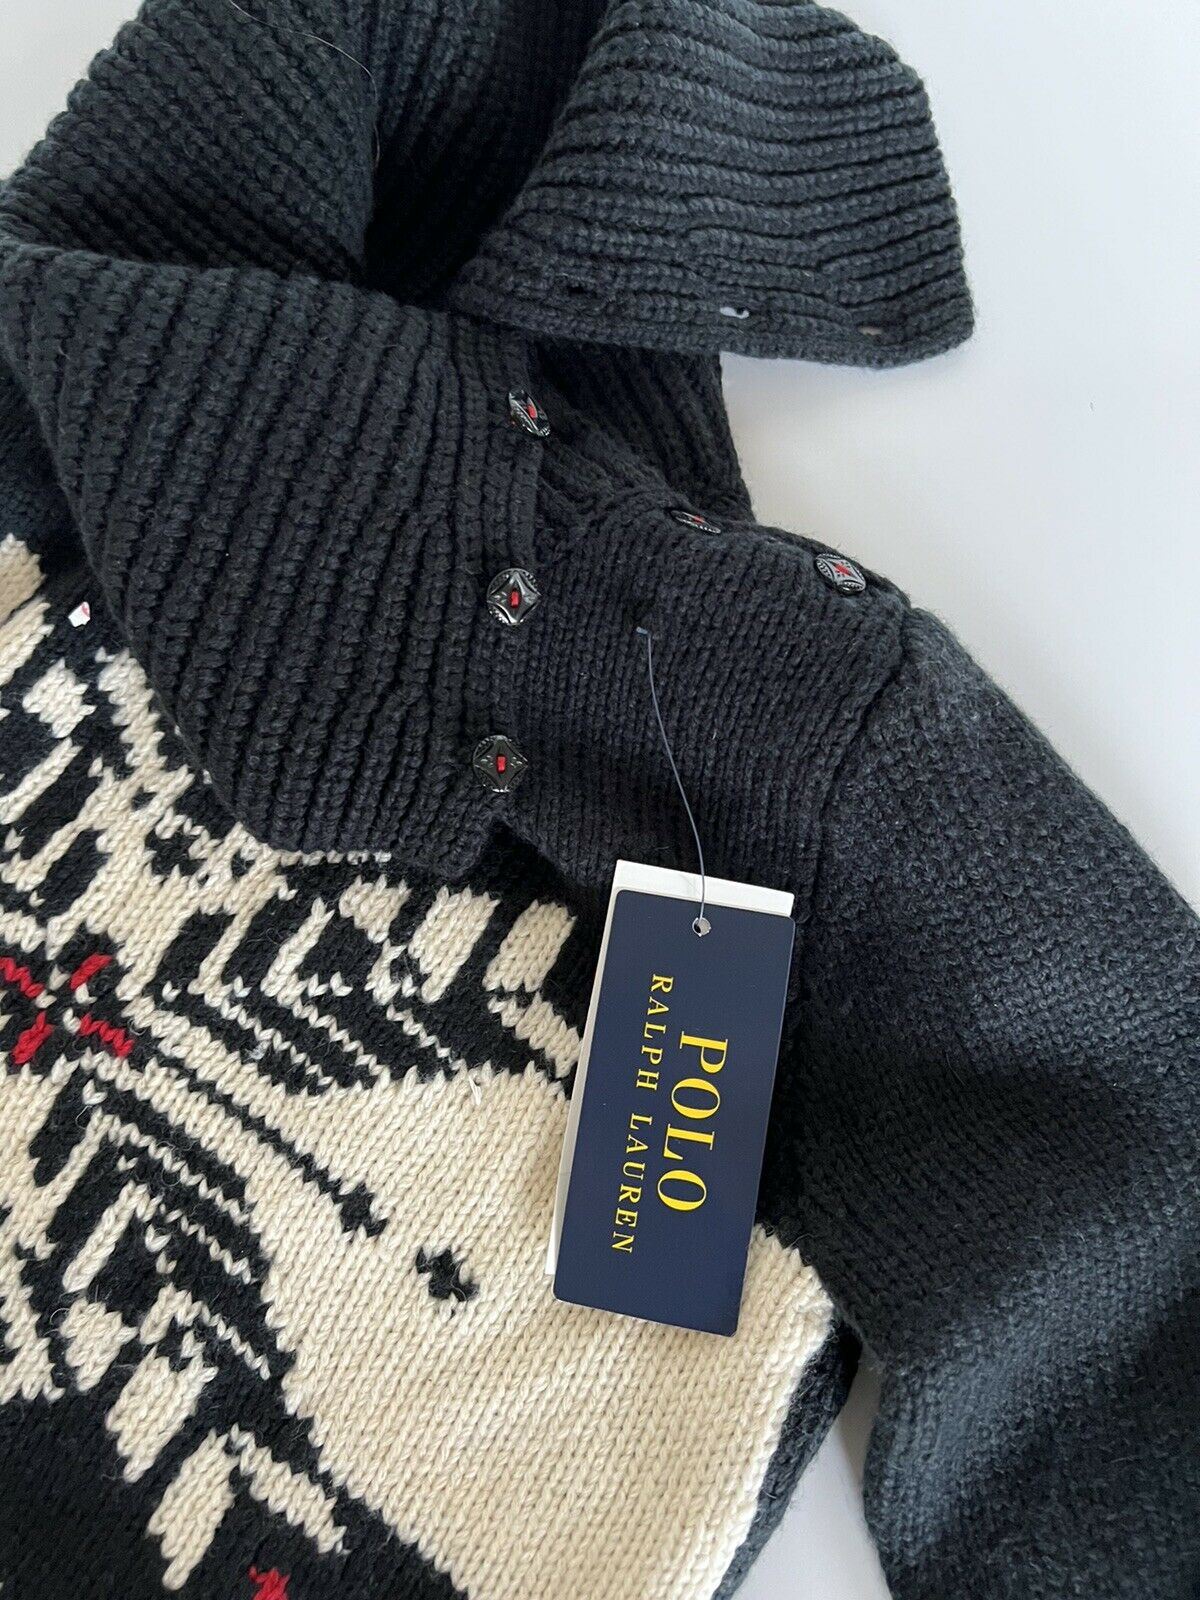 NWT $145 Polo Ralph Lauren Girls Black Snow Soft Sweater Size S (7)